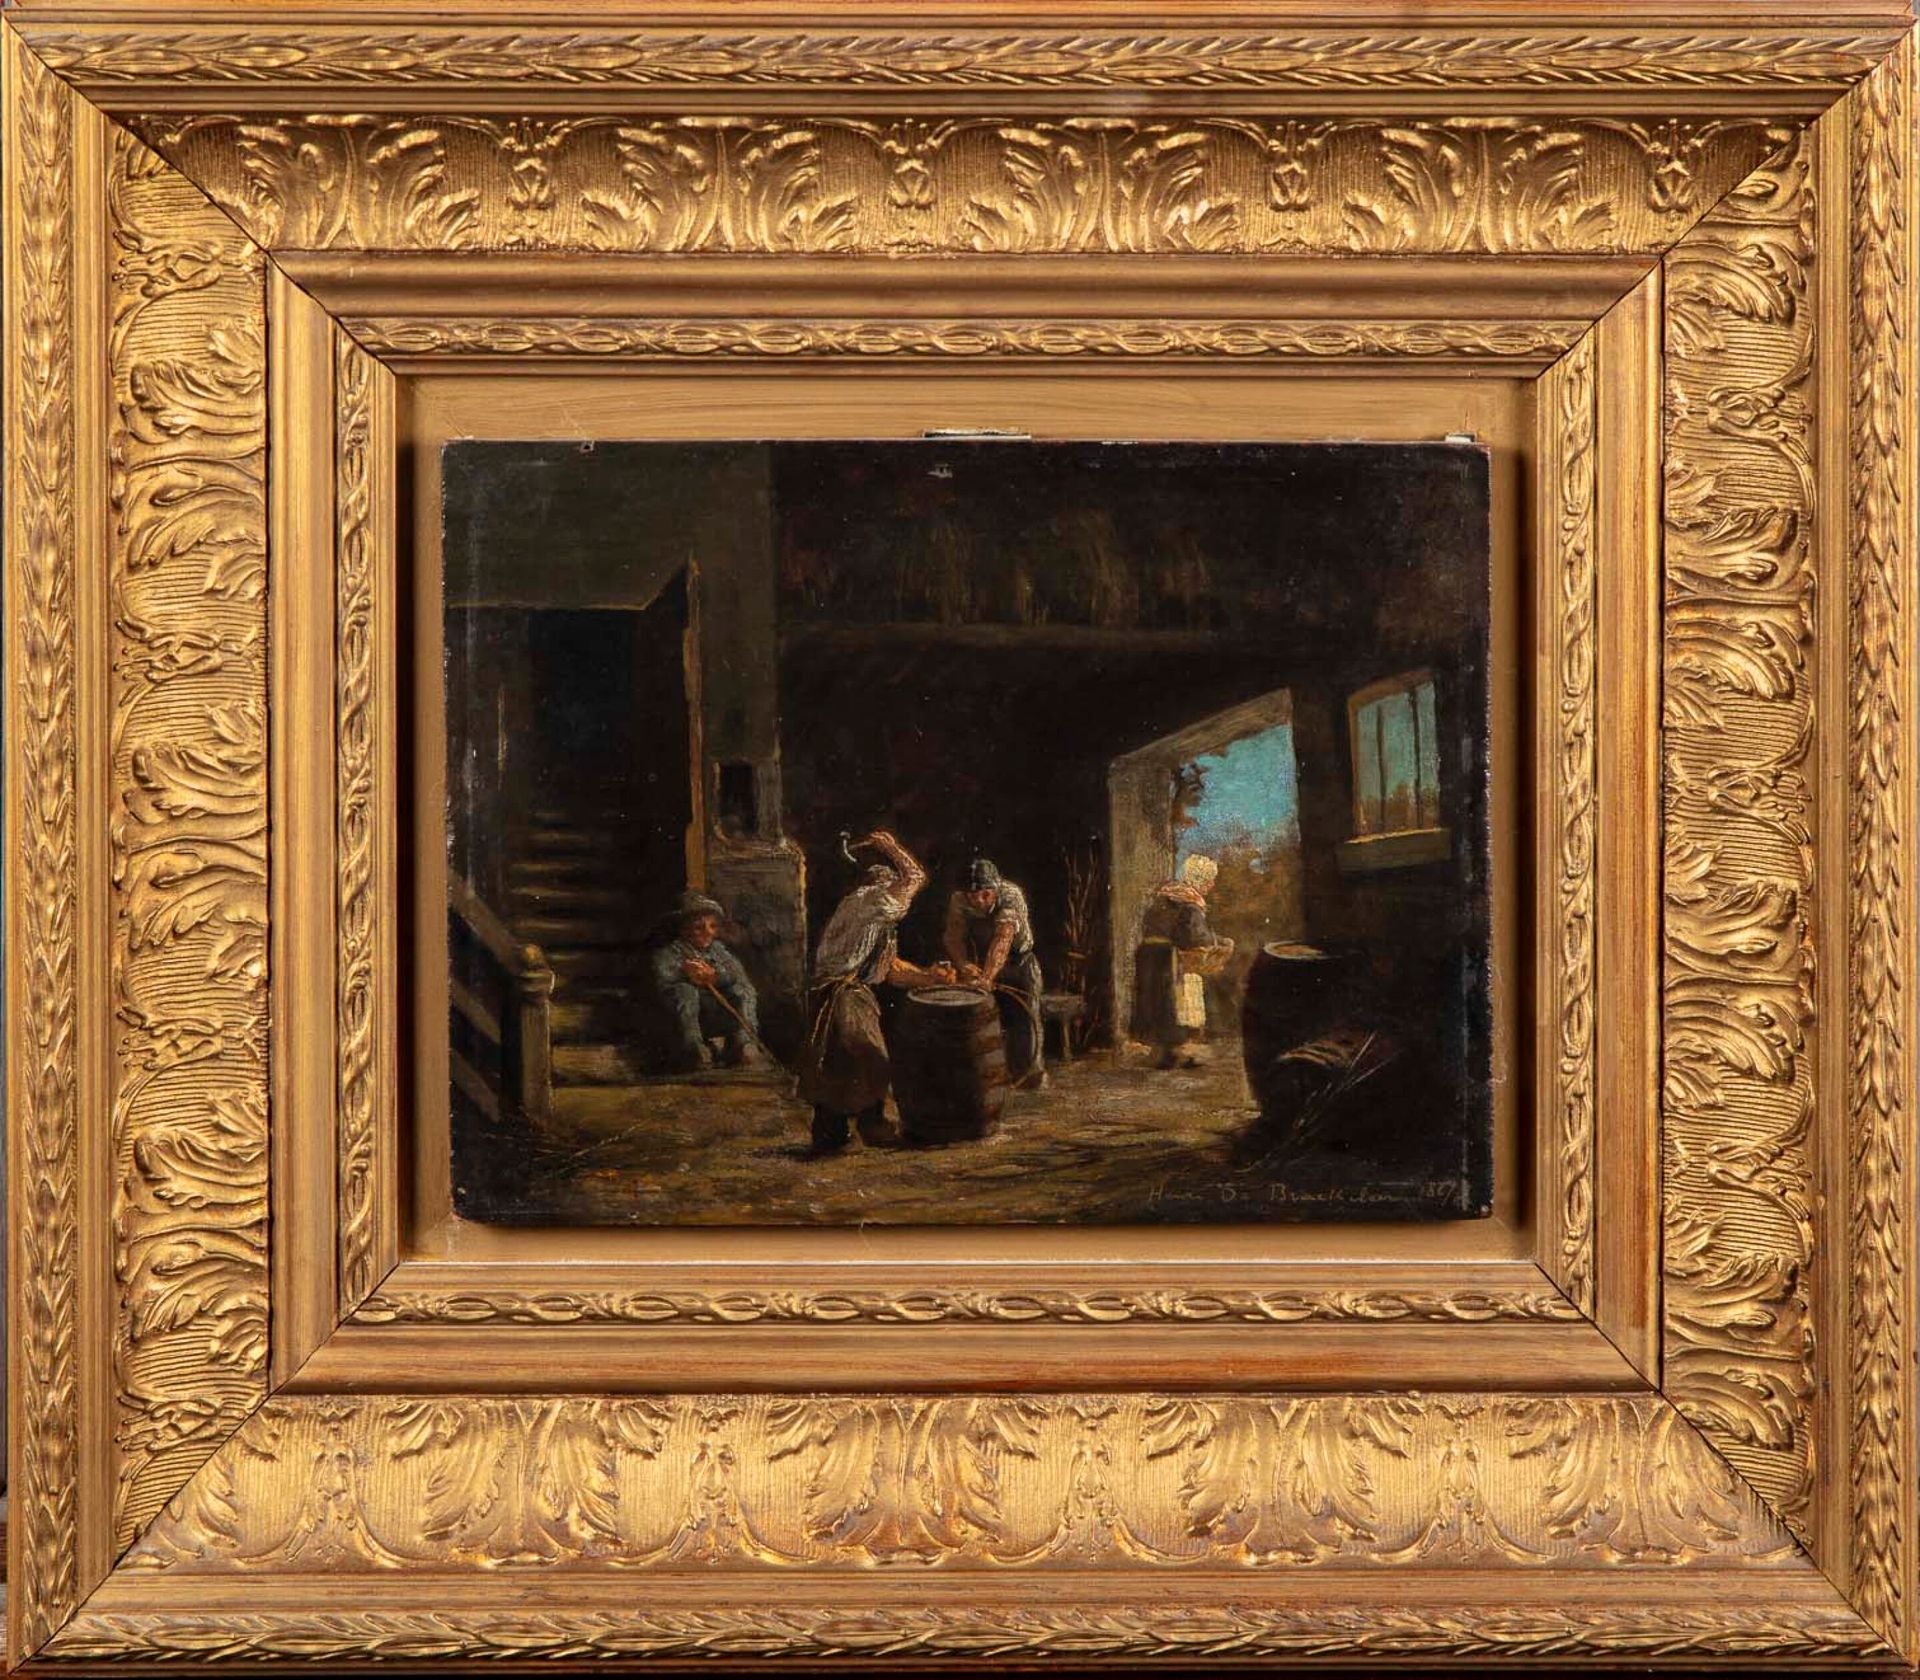 BRAEKELLER 亨利-德-布莱克勒 (1840-1888)

锻造厂的内部

板上油彩

左下方有1867年的签名和日期

21 x 27,5 cm